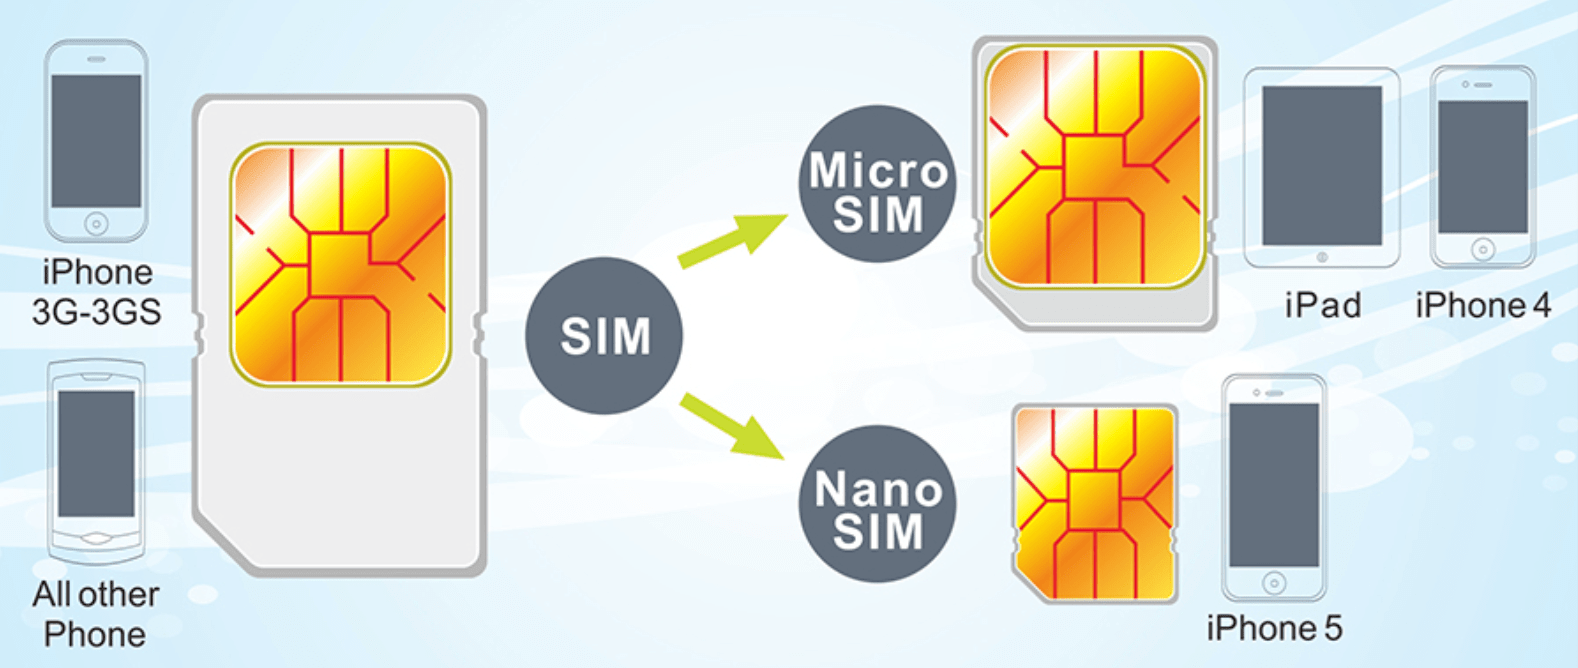 Мини сим микро сим нано сим. Mini SIM Micro SIM отличия. SIM Mini Micro Nano. Micro-SIM И Nano-SIM карты отличия. Приостановили сим карту